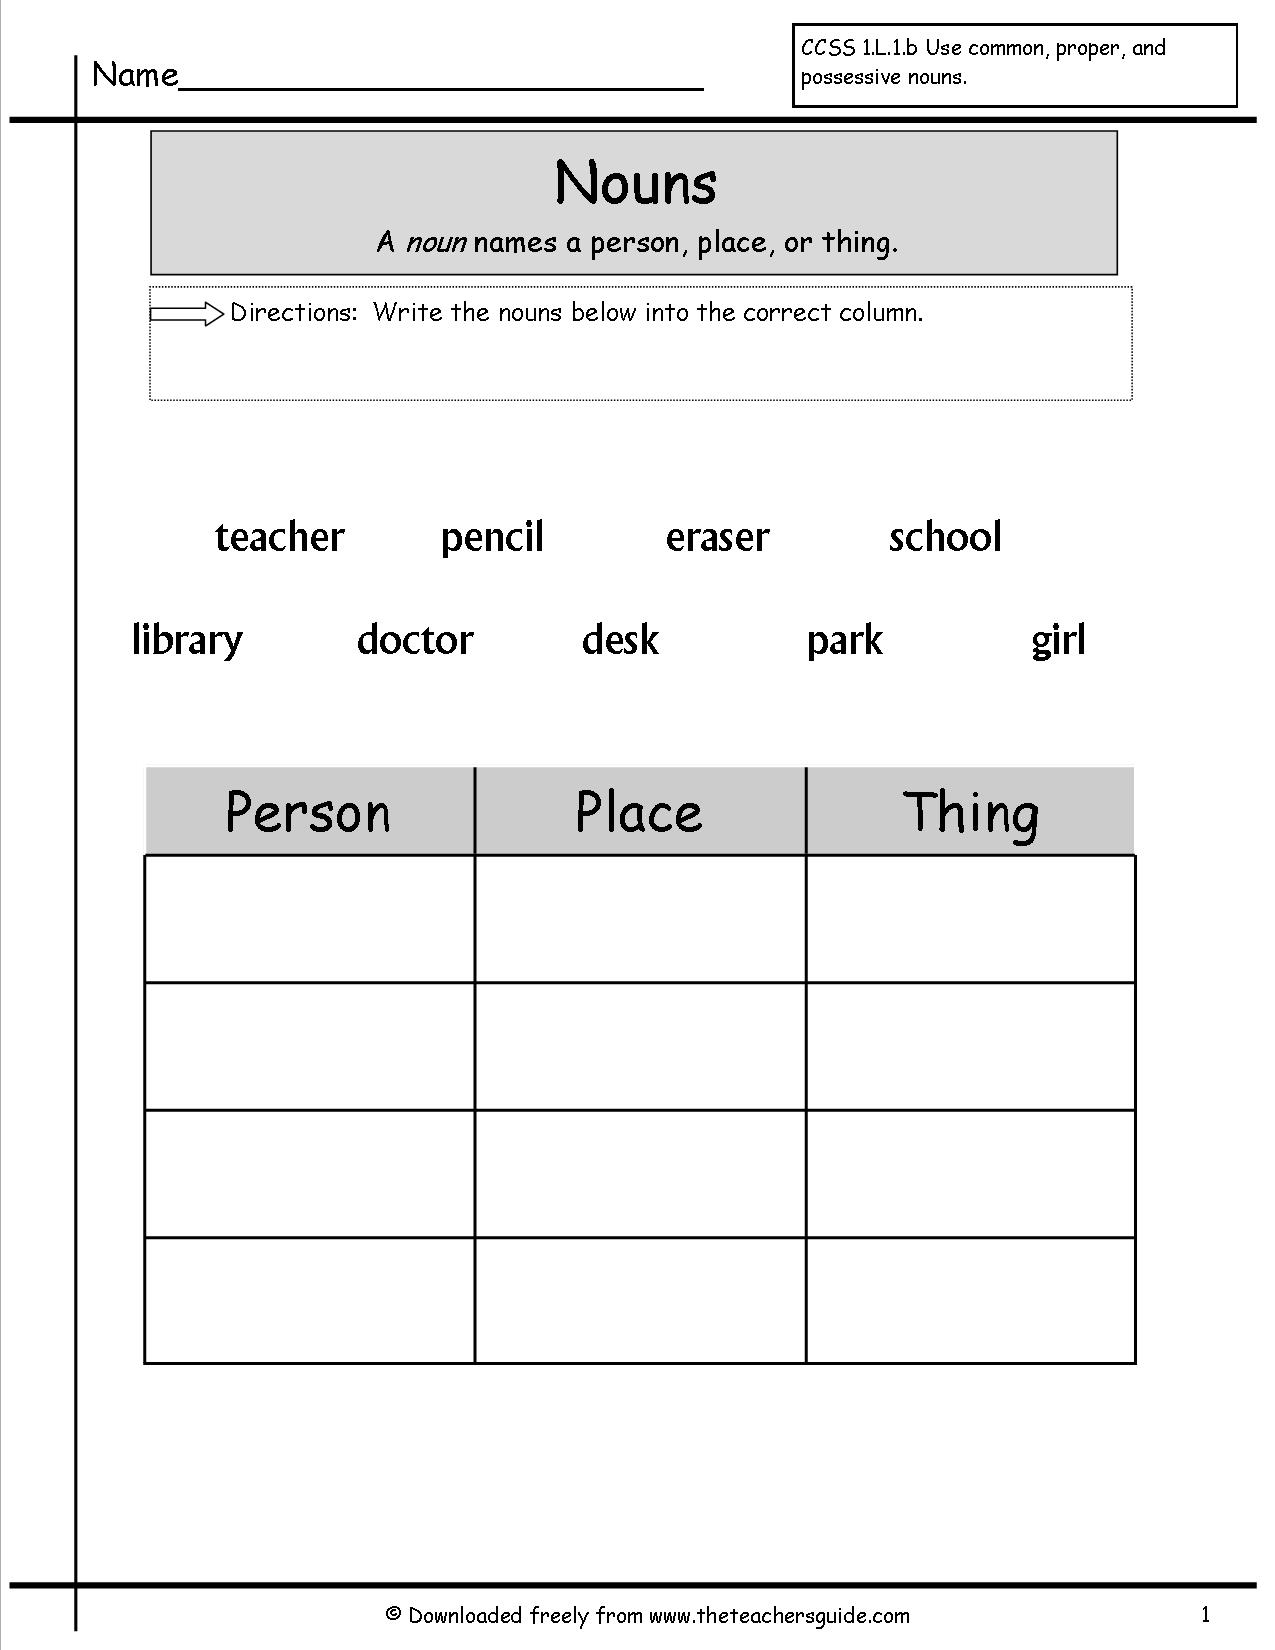 english-grammar-noun-worksheet-for-grade-1-nouns-worksheet-nouns-first-grade-proper-nouns